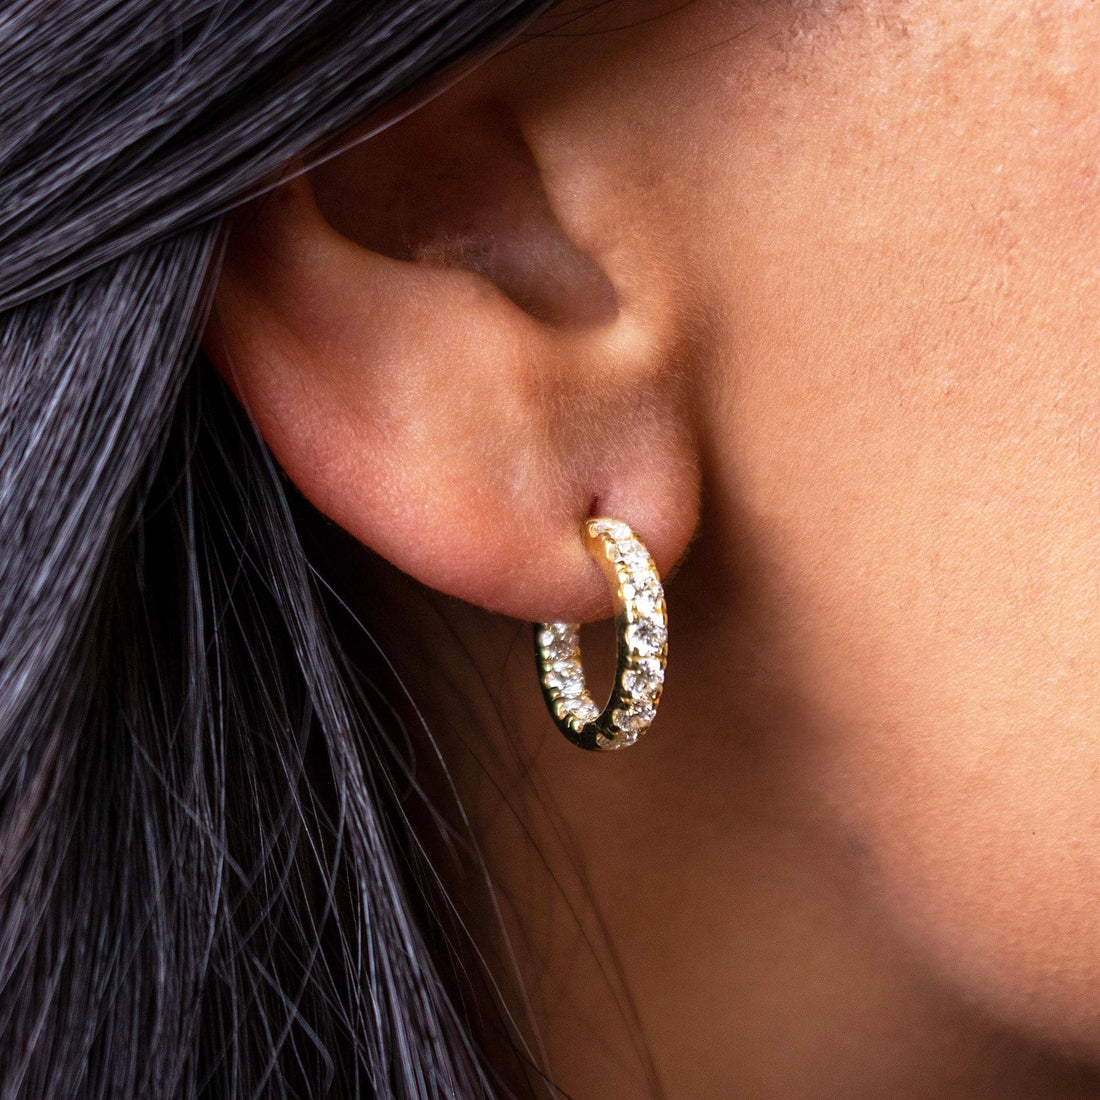 Buy 200+ Designs Online | BlueStone.com - India's #1 Online Jewellery Brand